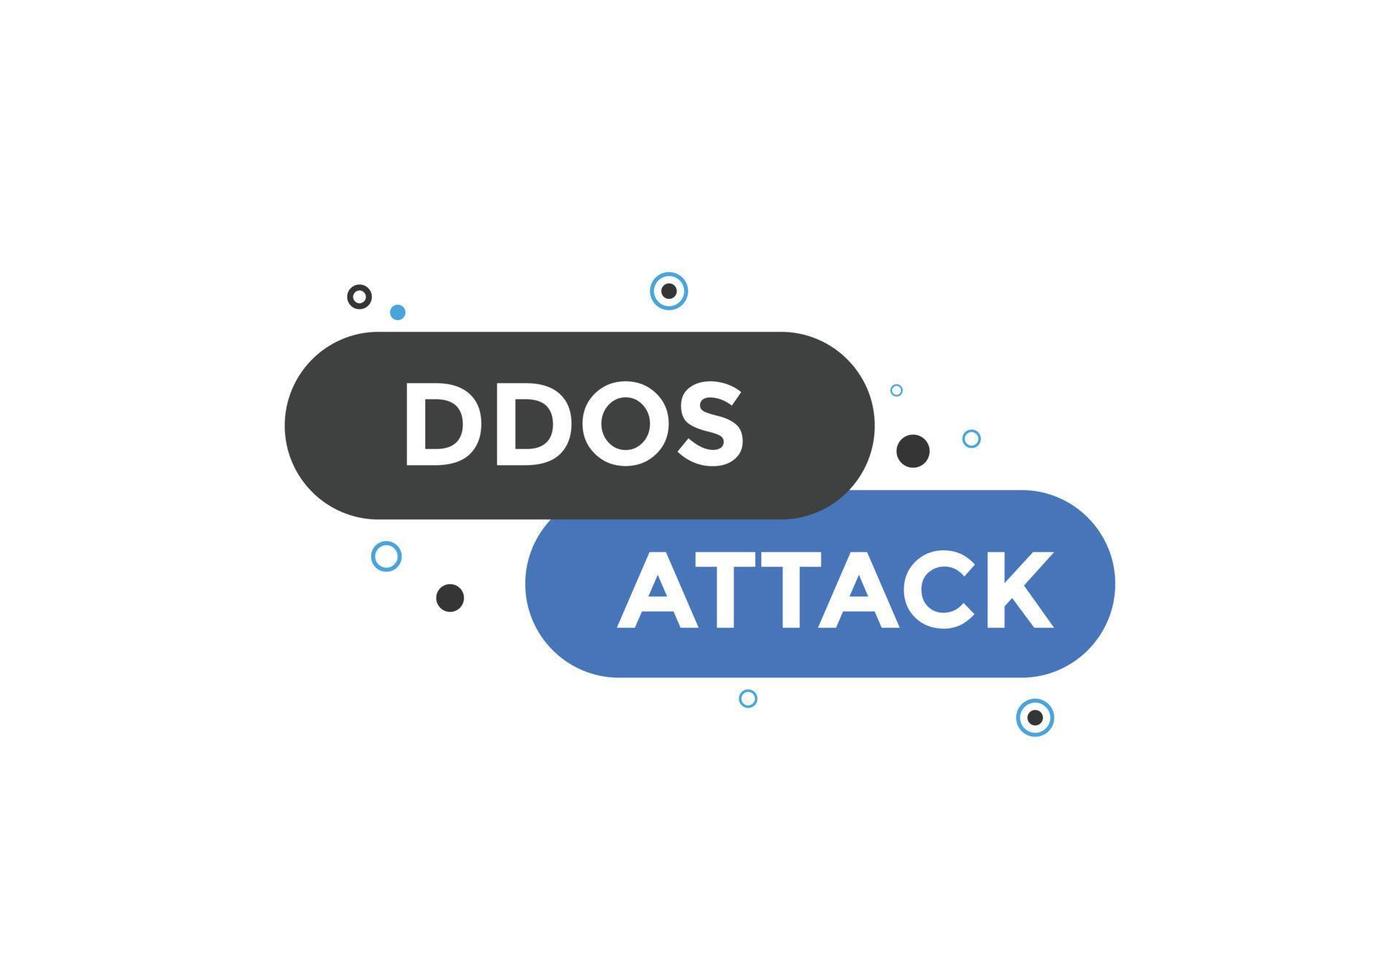 ddos attack text button. ddos attack speech bubble. ddos attack text web template Vector Illustration.